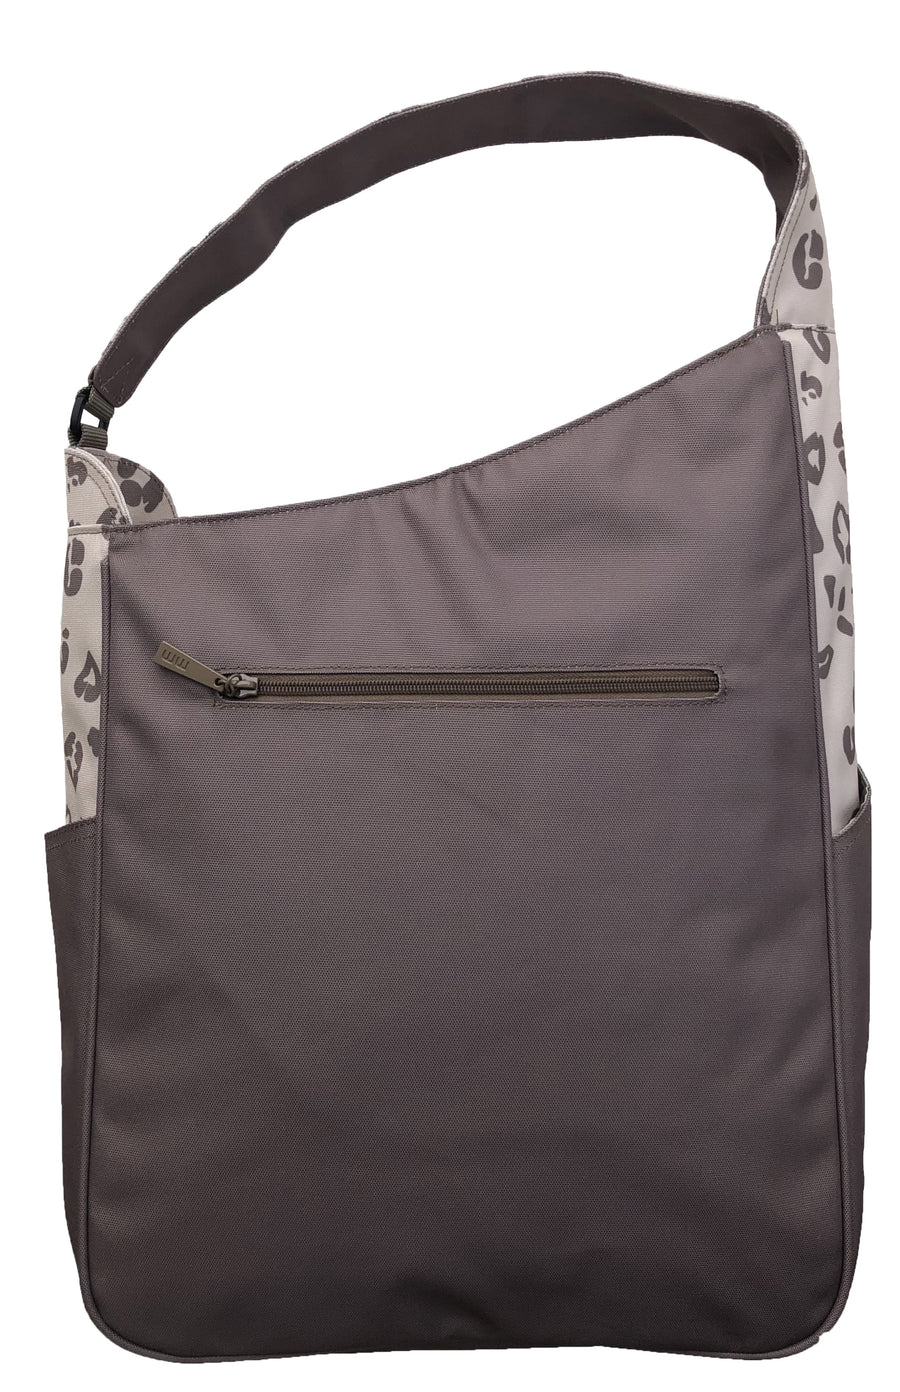 Shoulder Bag in Safari Block - CLEARANCE SALE - 50% OFF